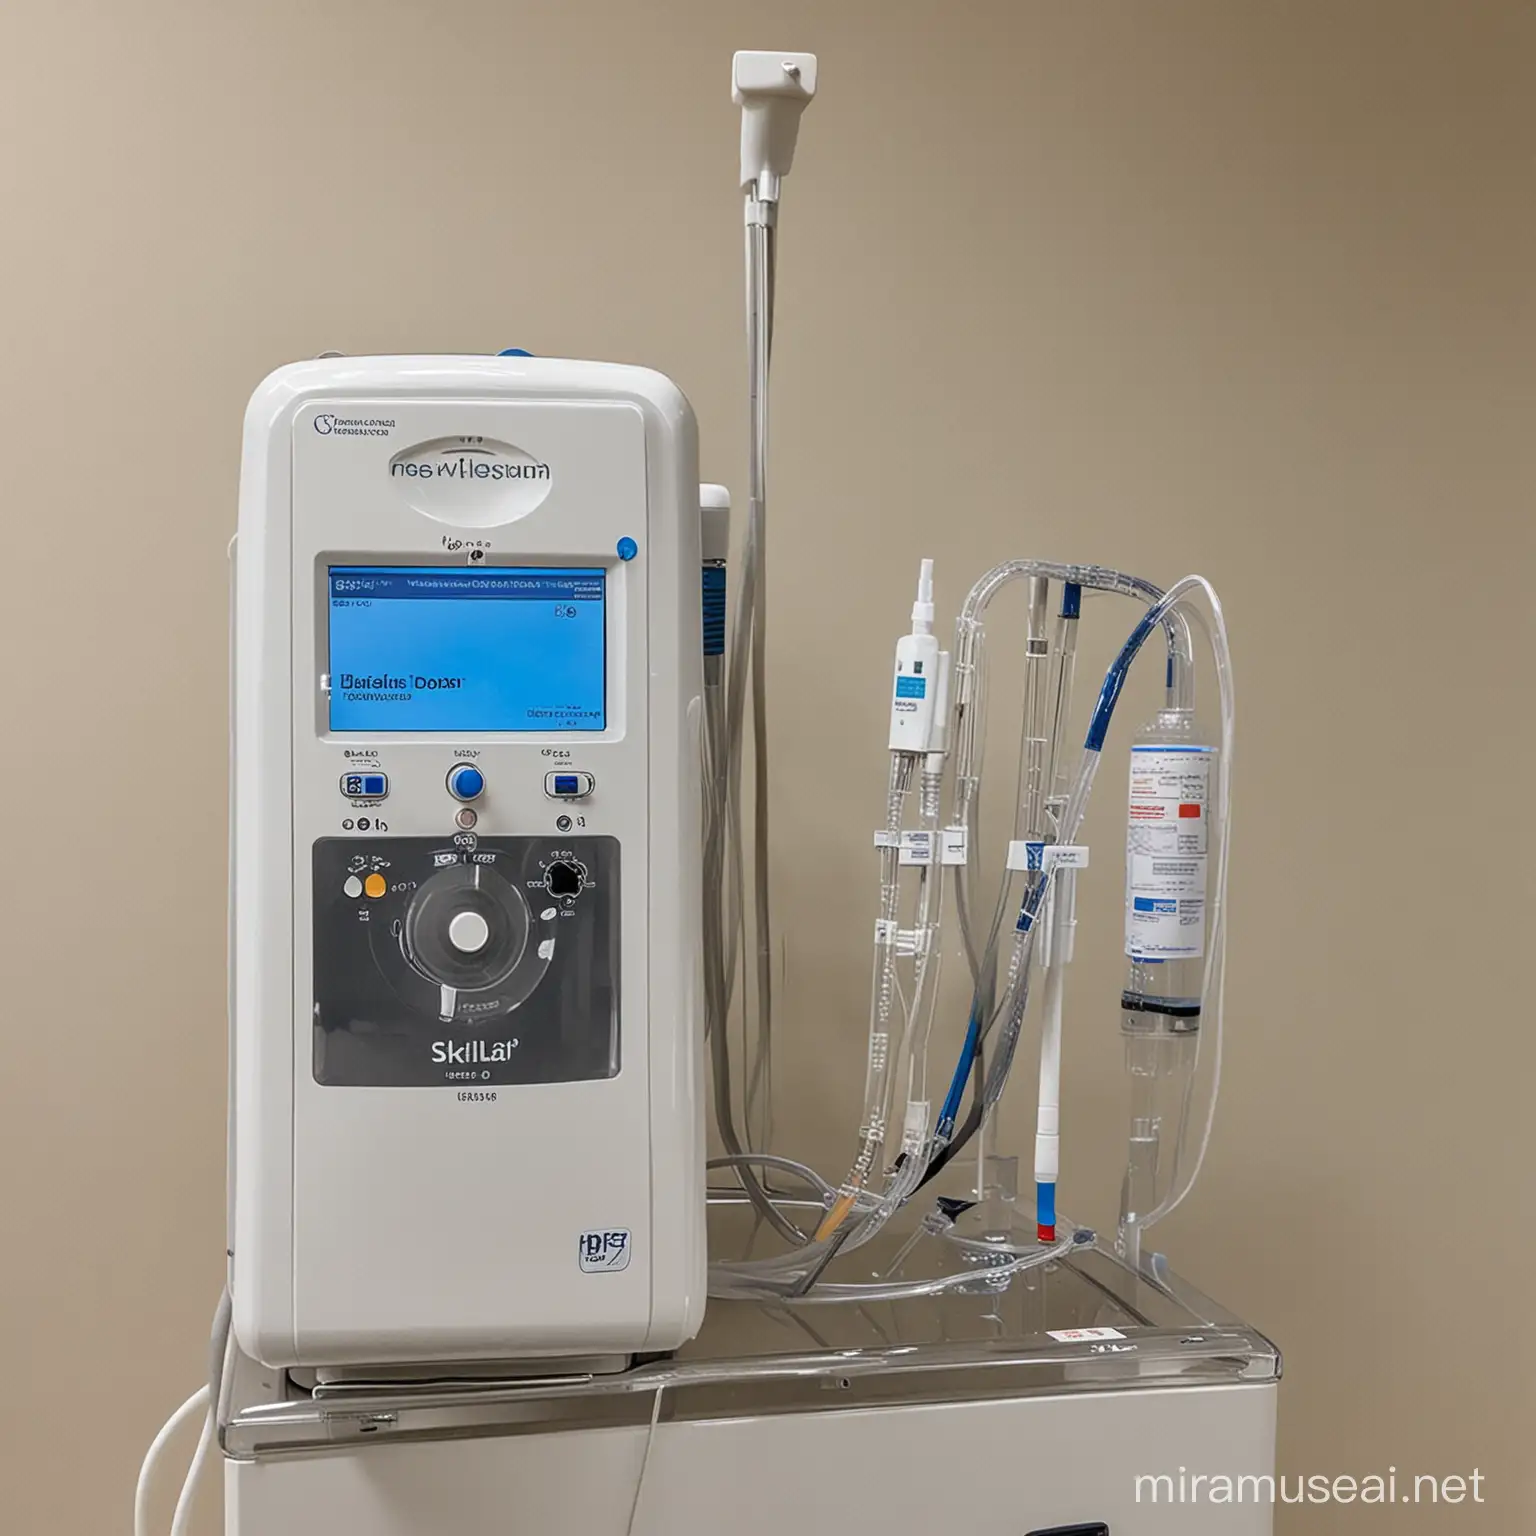 dialysis machine in skill lab